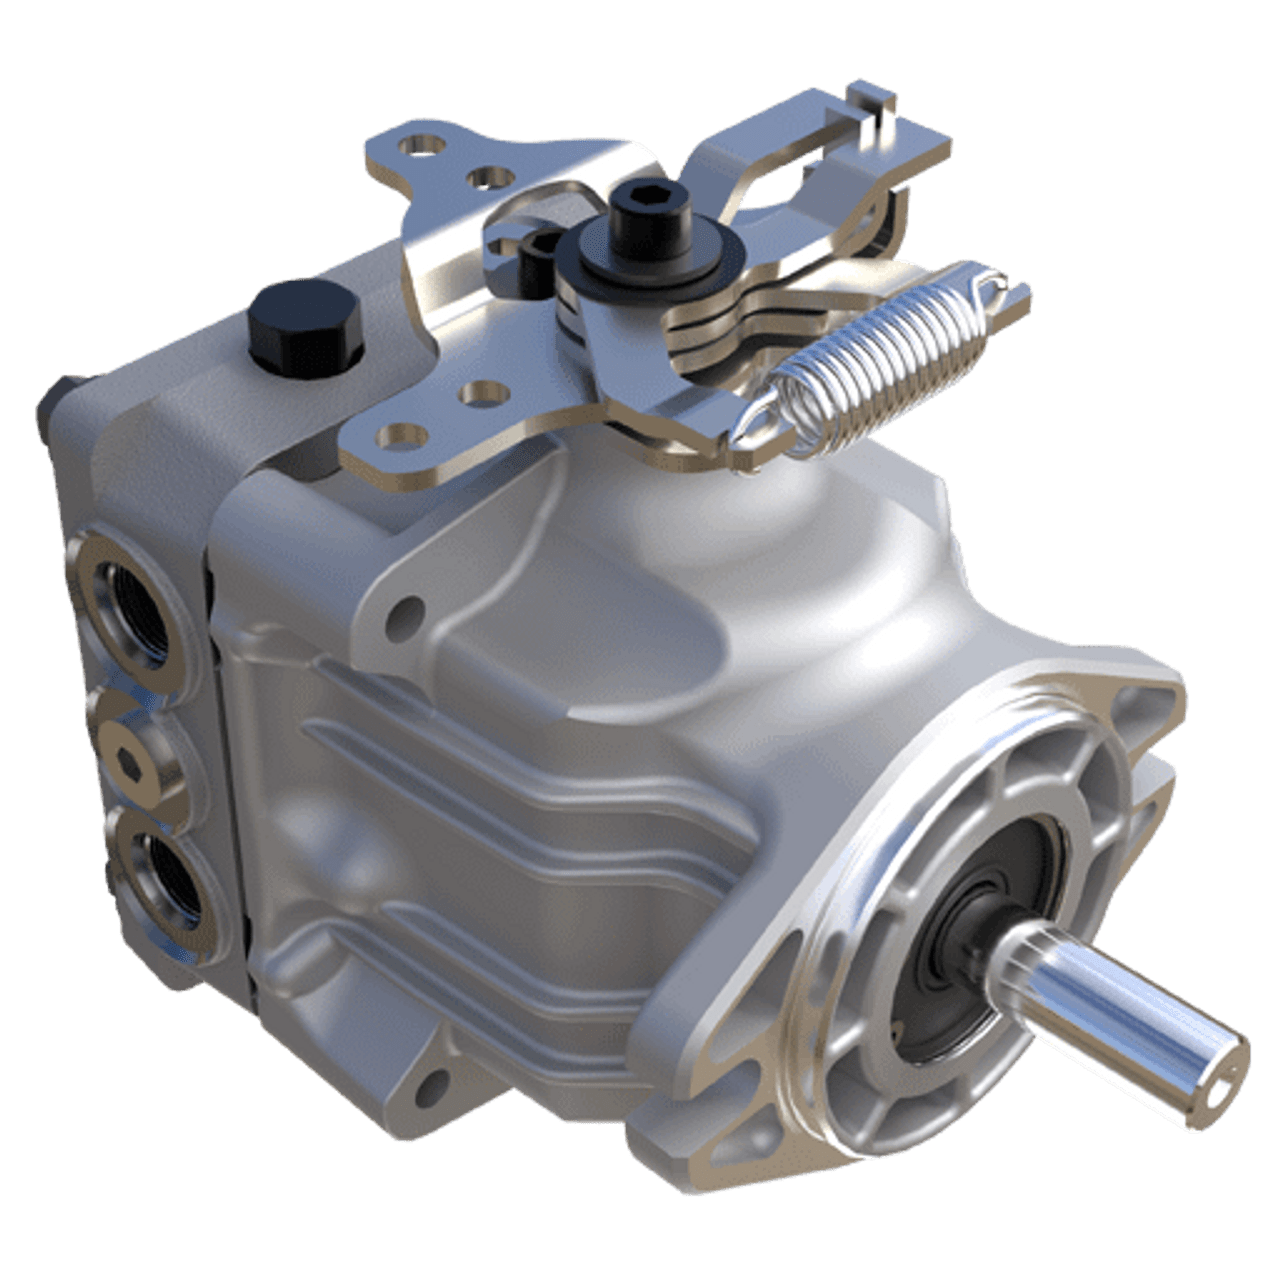 Hydro Gear PG-1GCC-DY1X-XXXX Hydraulic Pump P Series | Original OEM Part | Free Shipping - LawnMowerPartsWorld.com